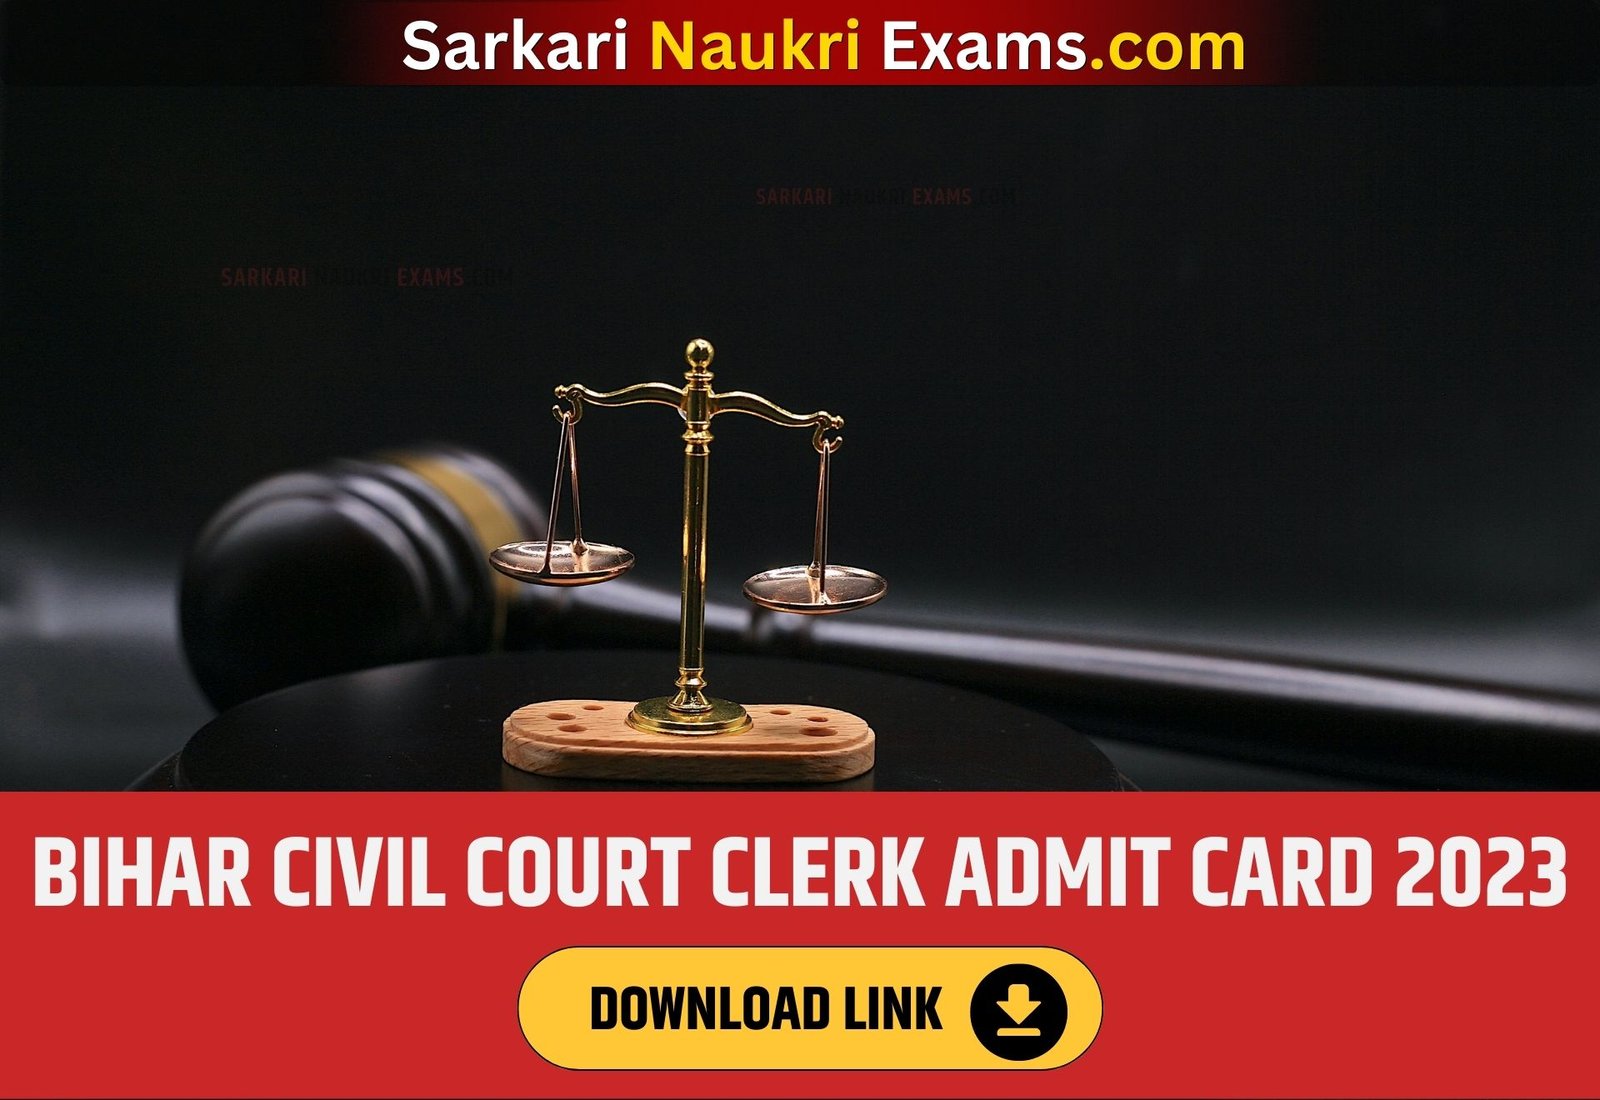 Bihar Civil Court Clerk Admit Card 2023 | Download Link, Exam Date